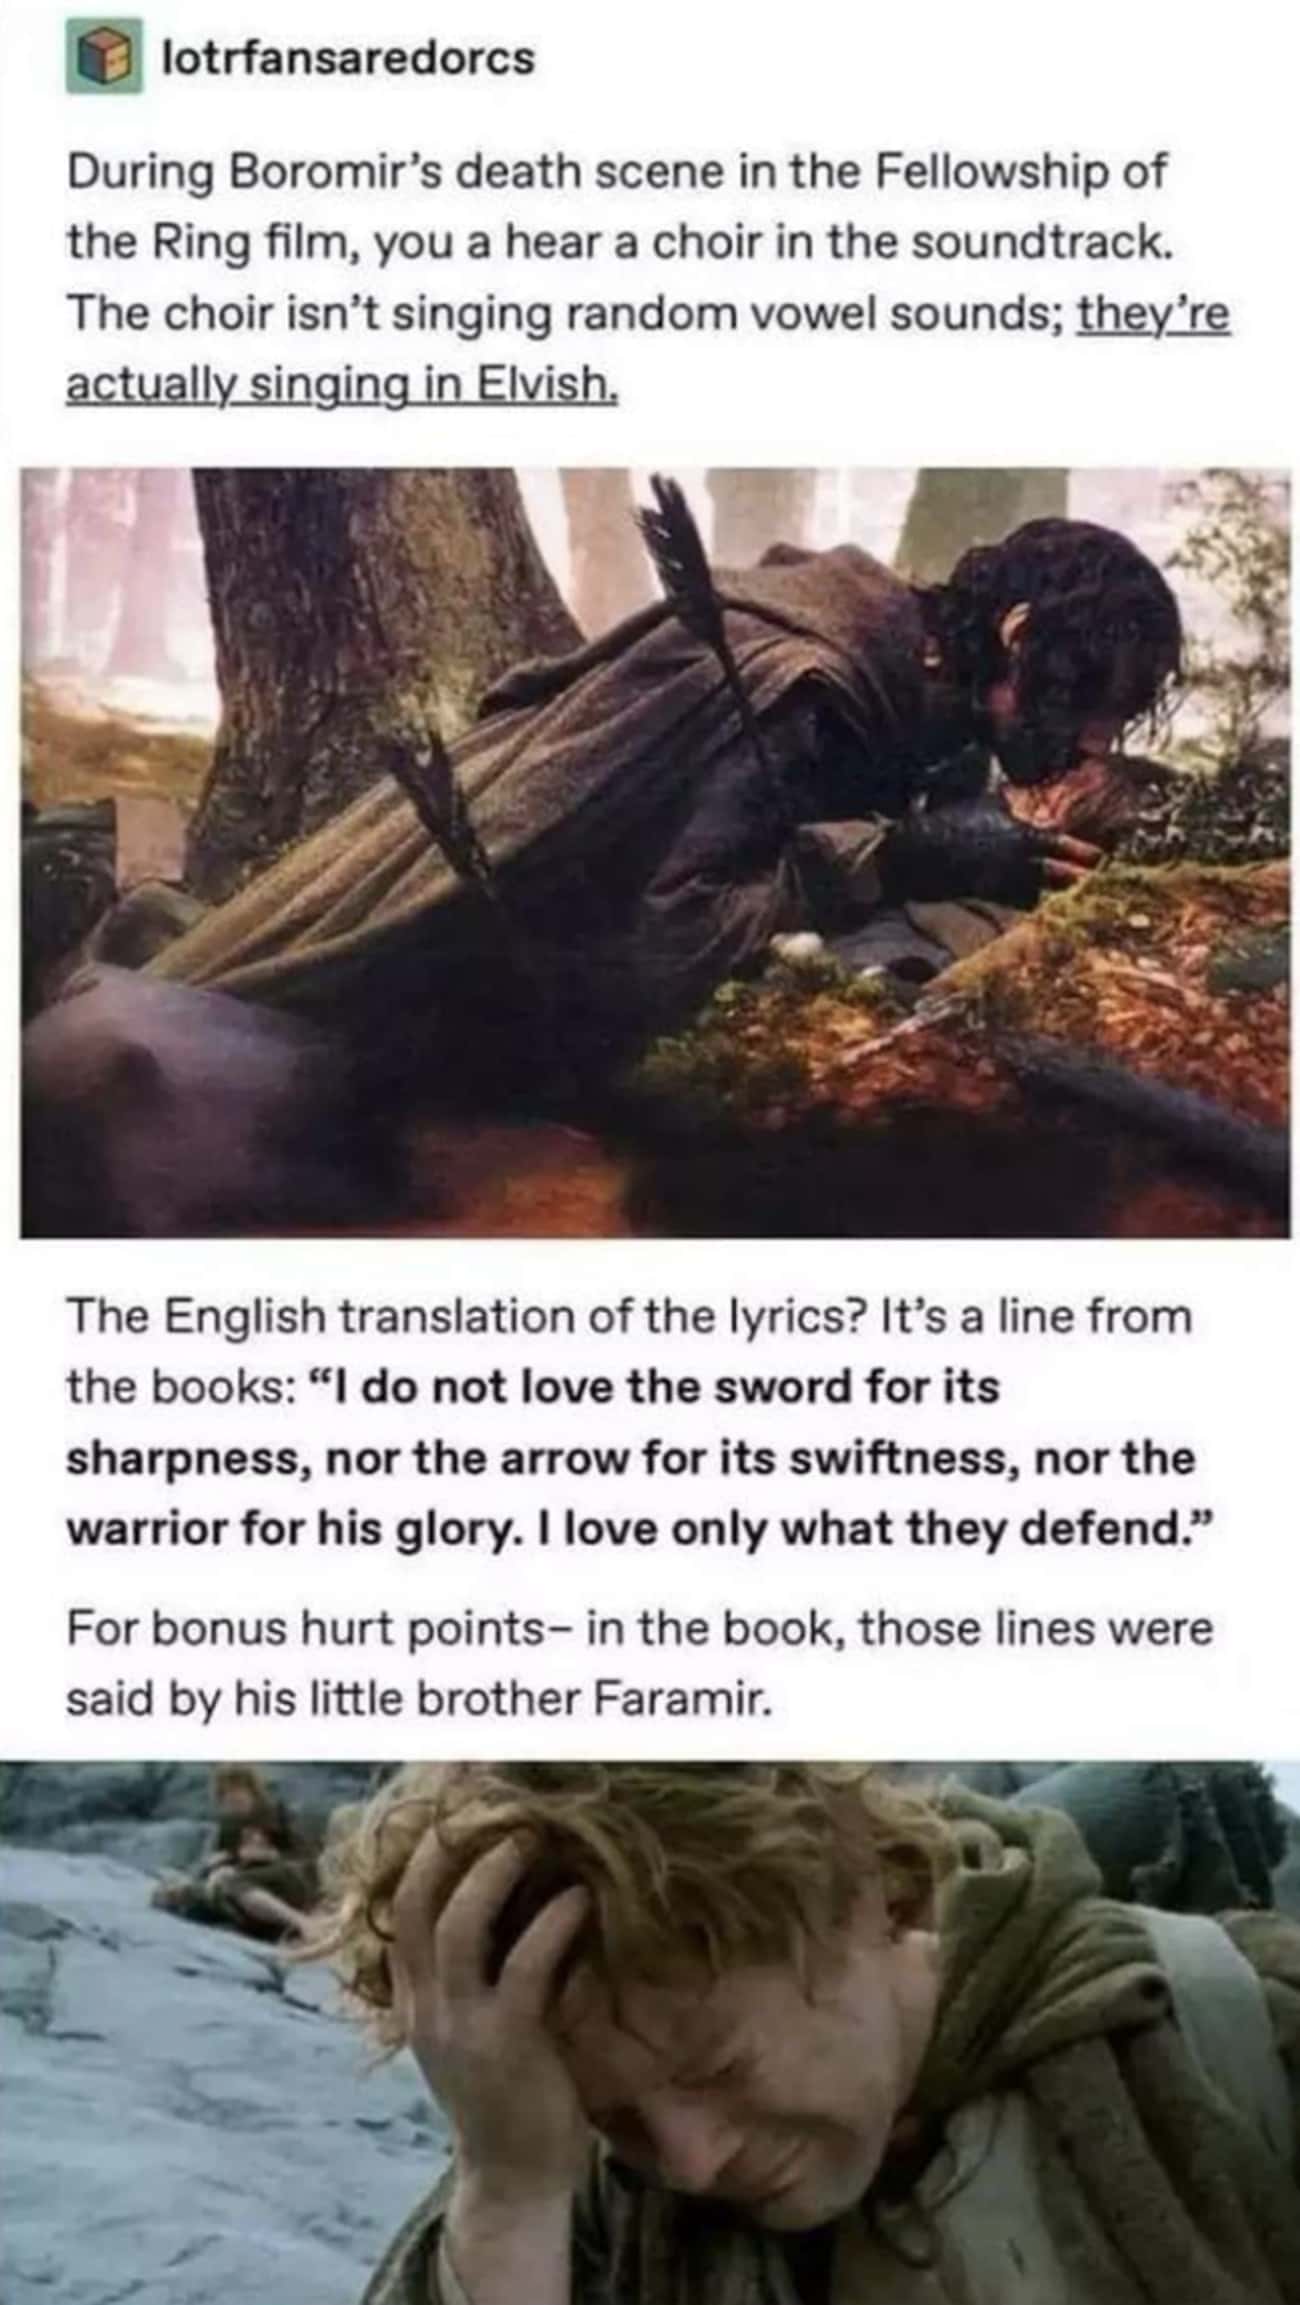 The Elvish Lyrics During Boromir's Last Scene Are Incredibly Depressing